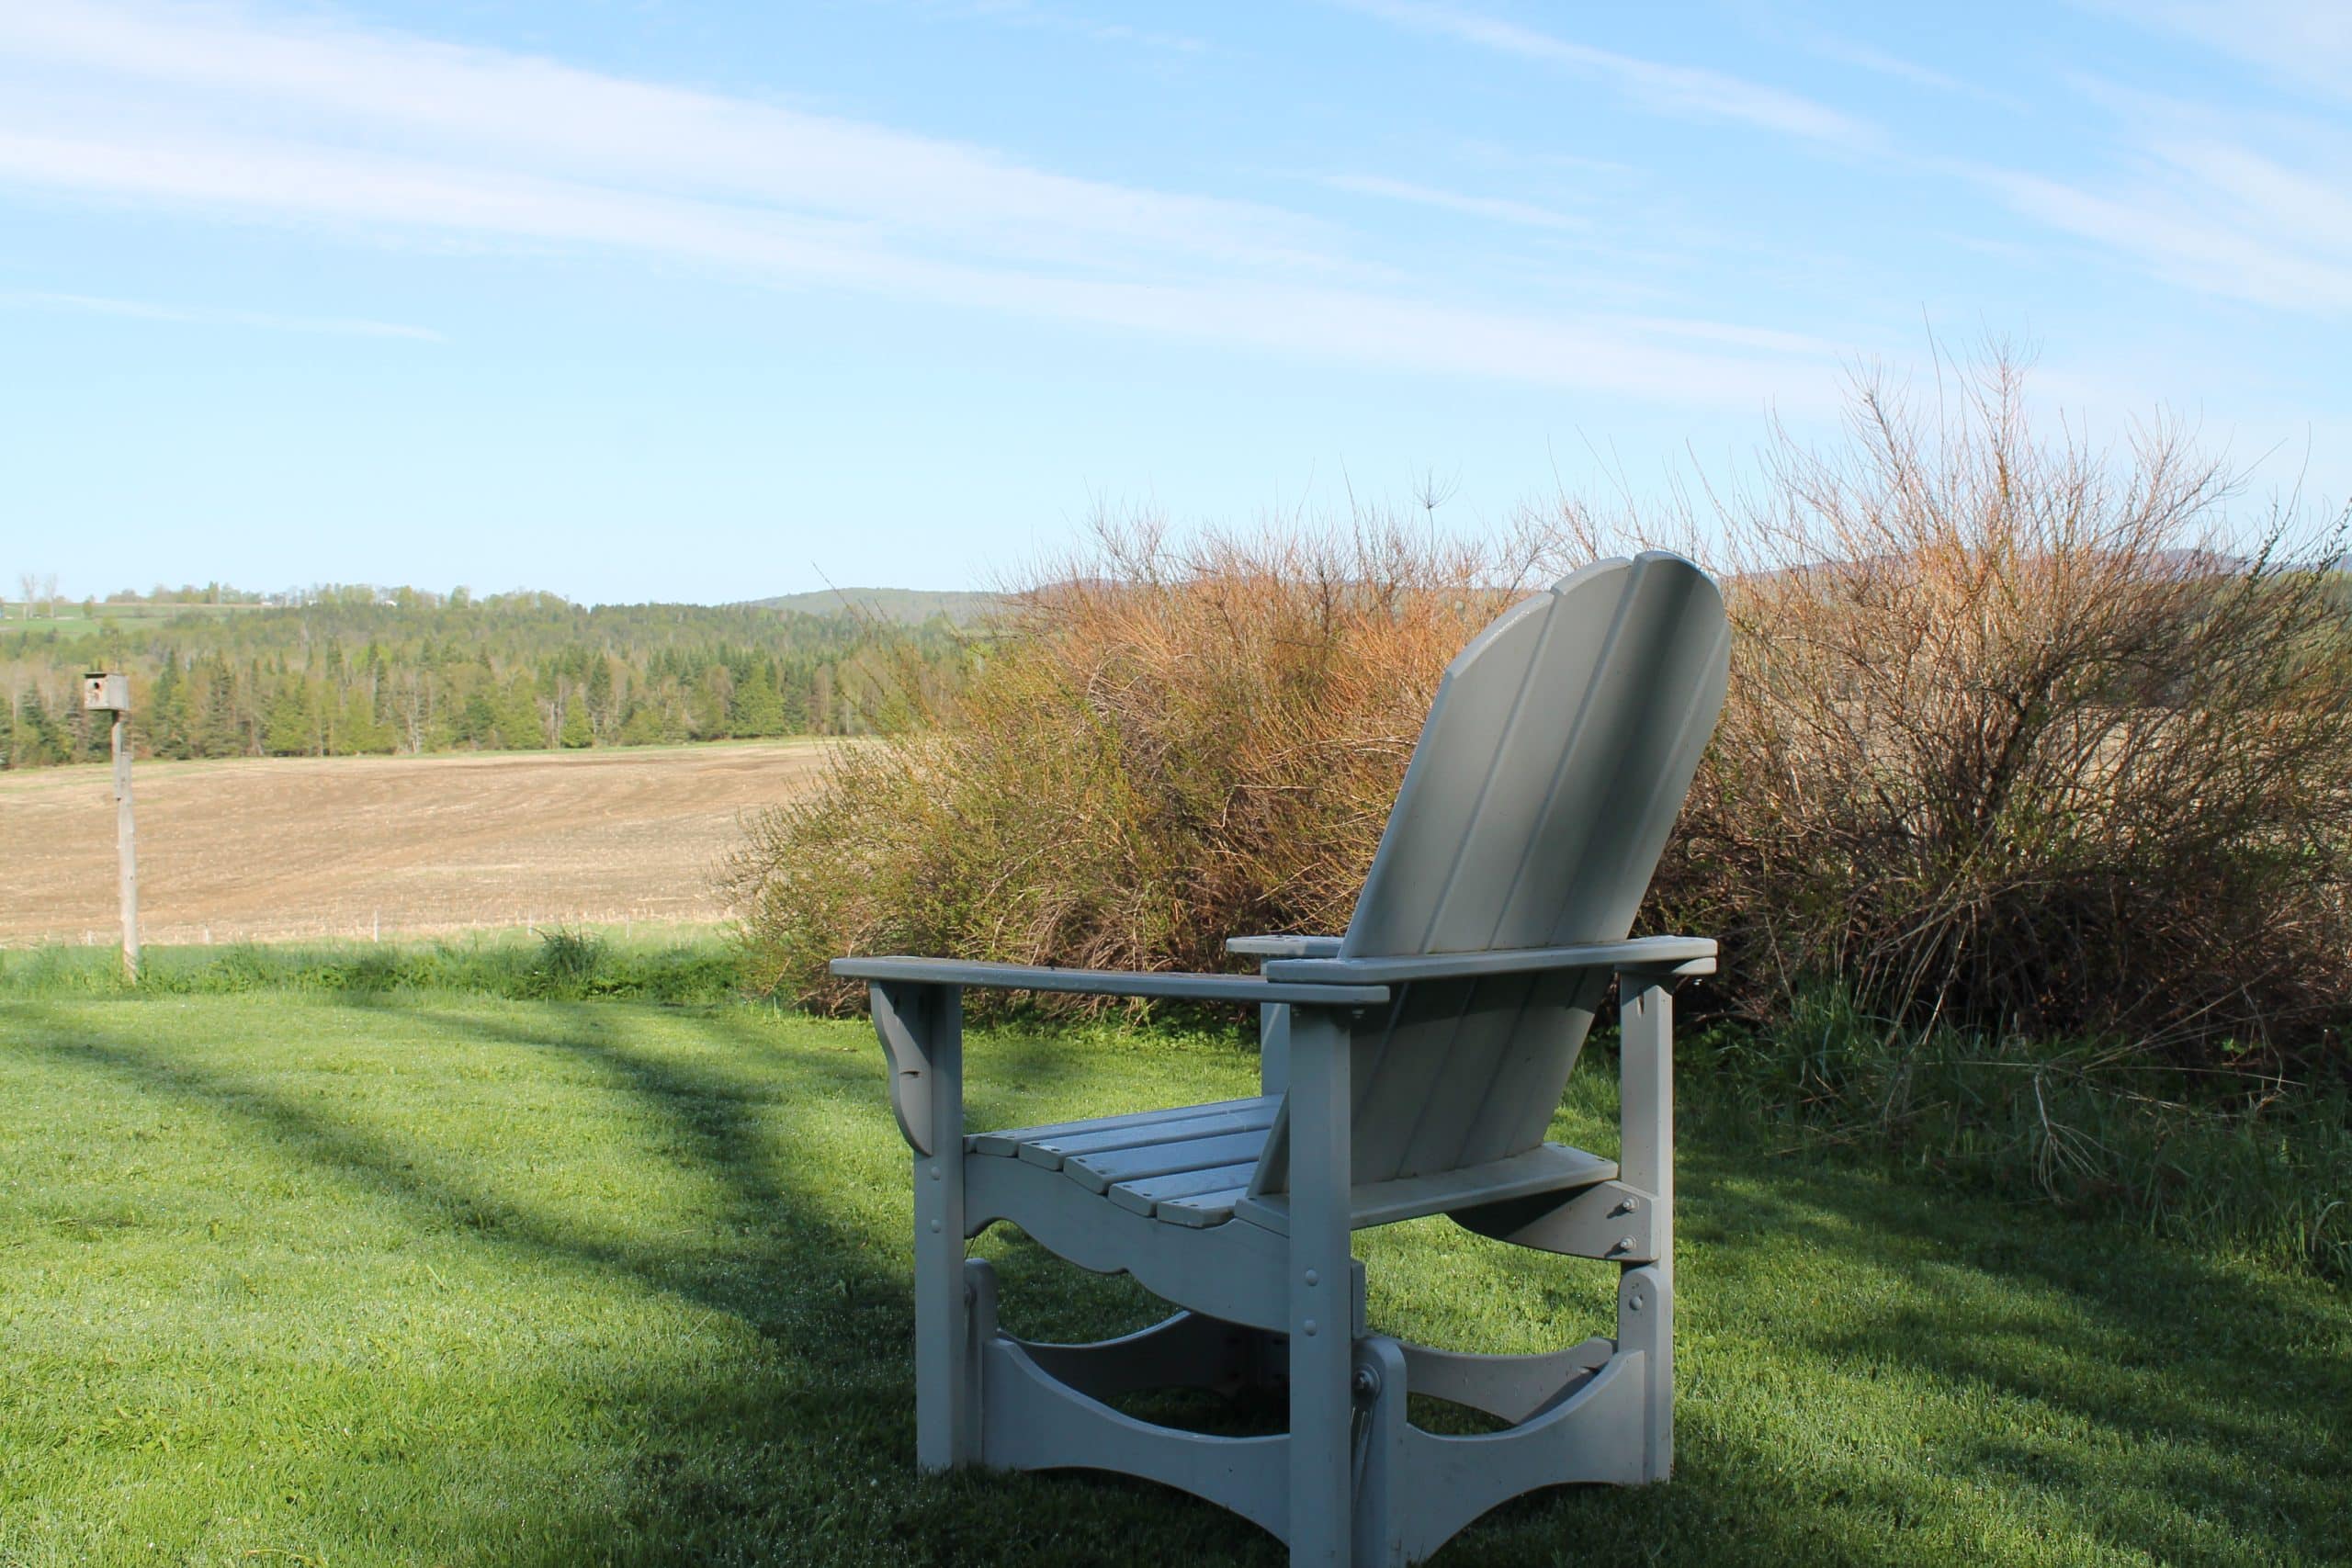 7.The Adirondack Chair